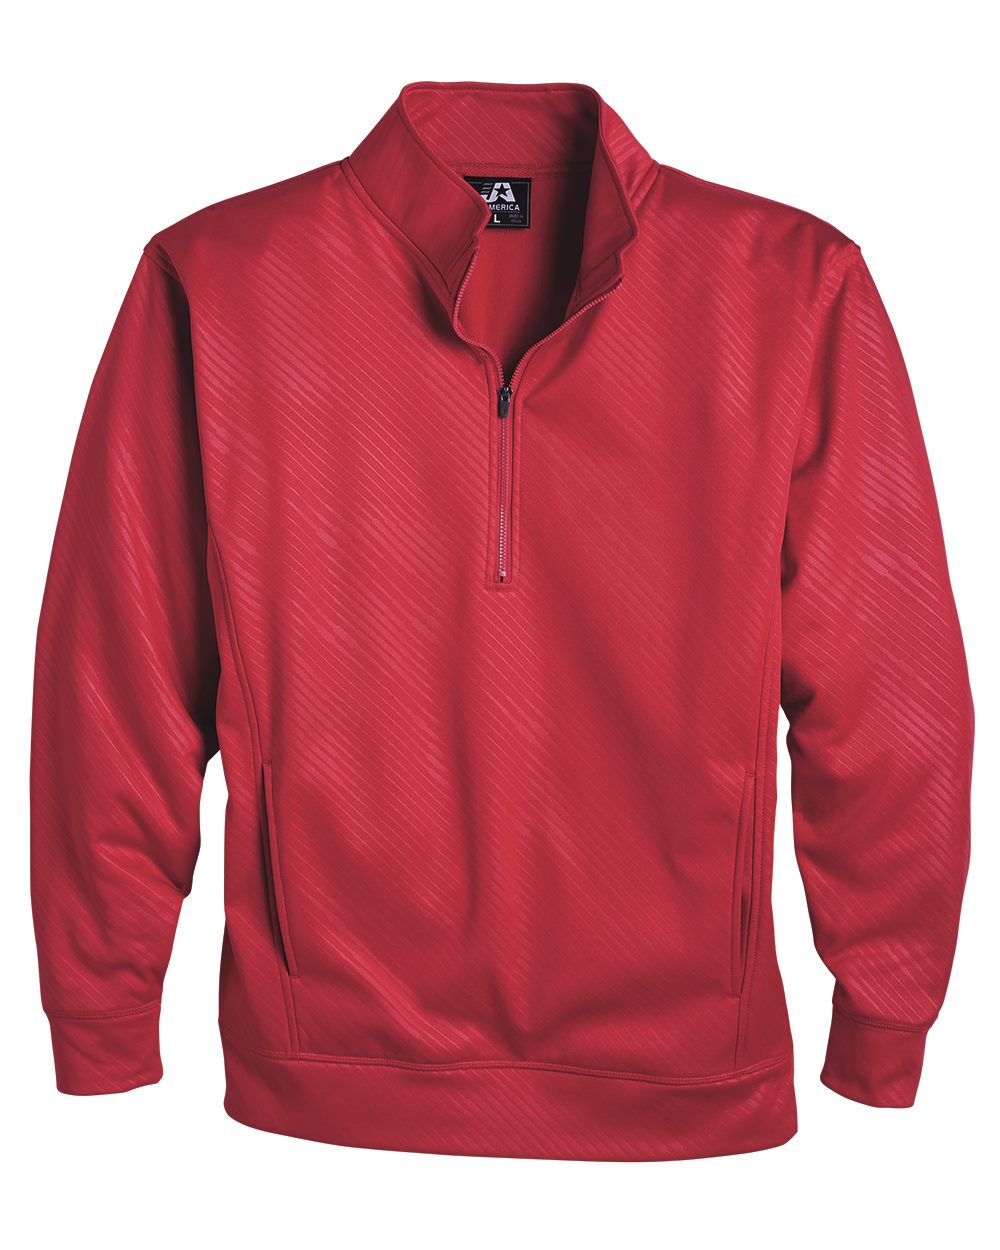 J. America 8669 - Volt Polyester Quarter-Zip Sweatshirt